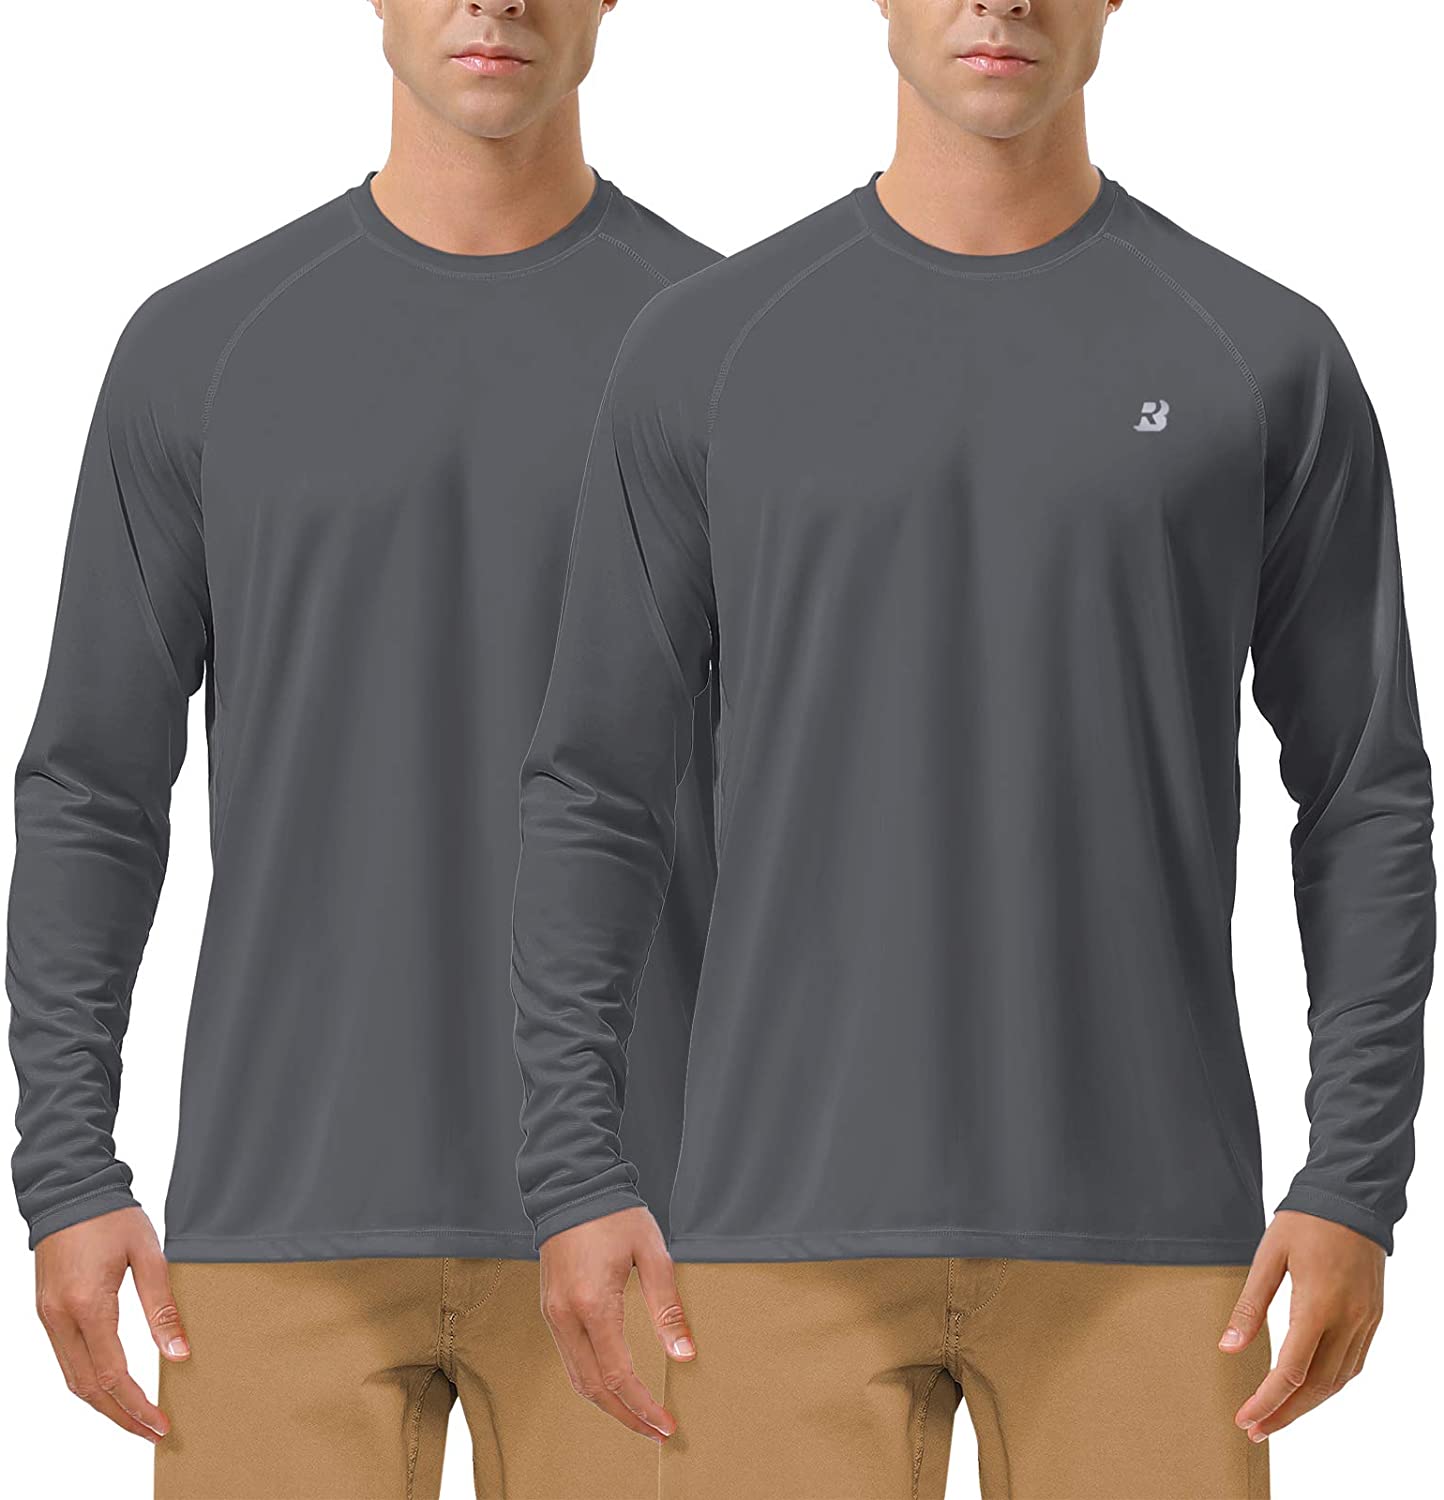 Roadbox Fishing Shirts for Men Long Sleeve UV Sun Protection Tee Tops